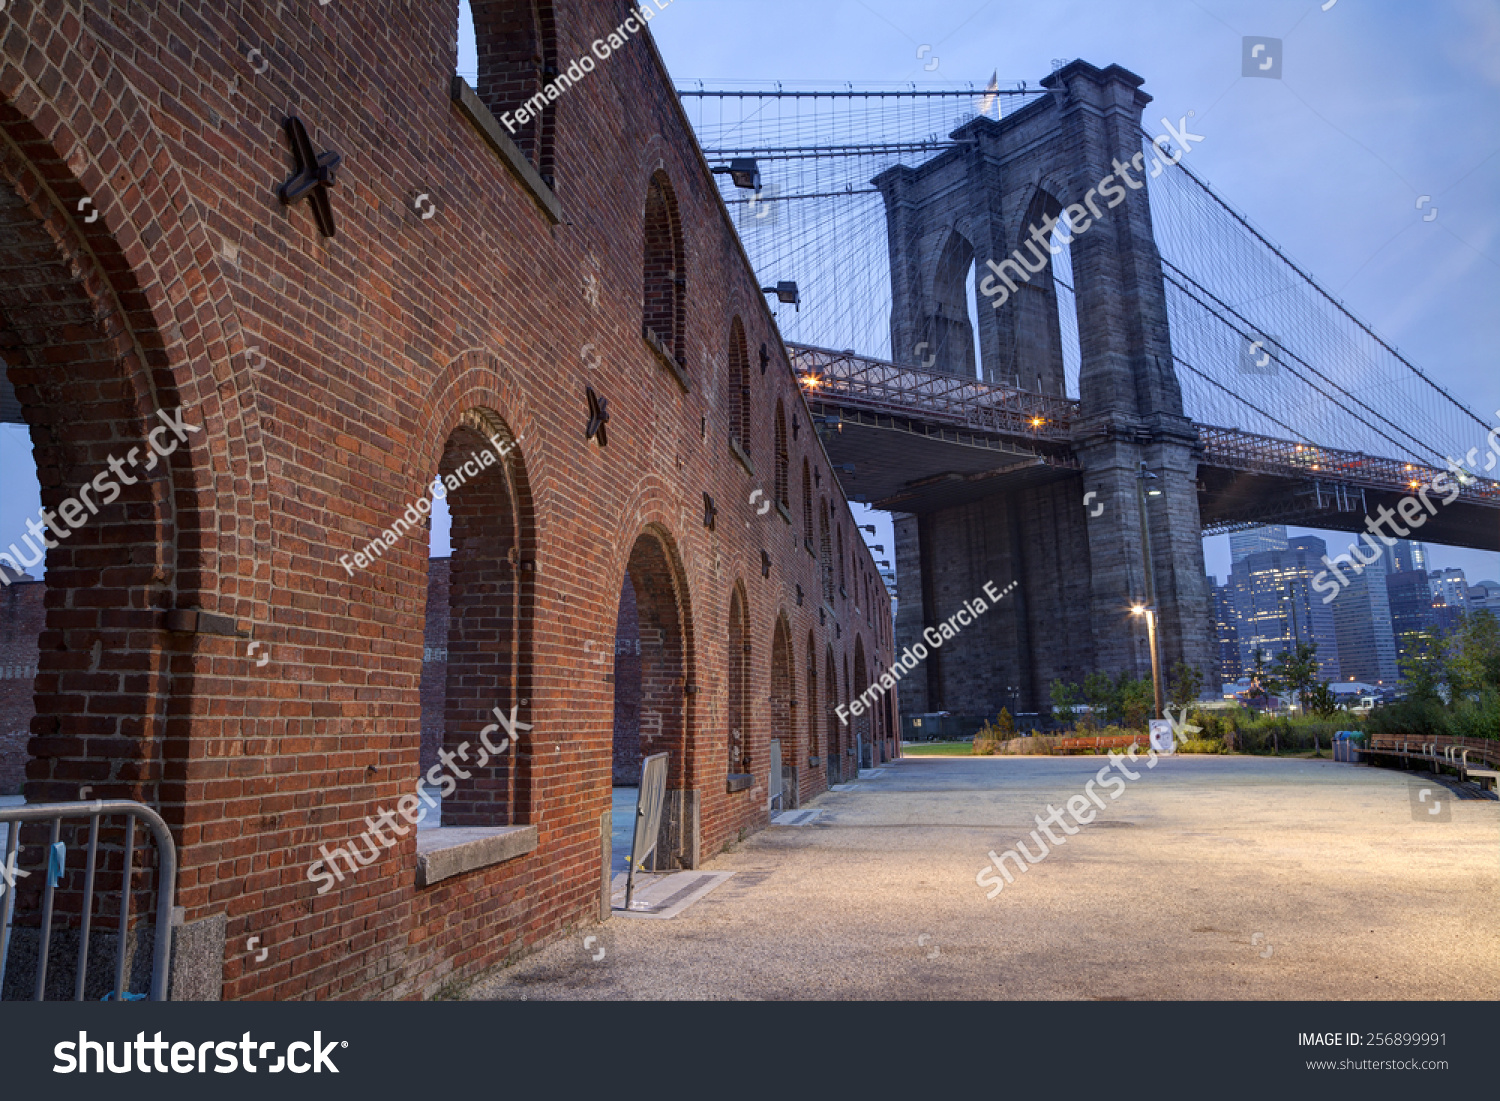 stock-photo-dumbo-brooklyn-new-york-july-brooklyn-bridge-tower-and-brick-wall-during-the-early-256899991.jpg